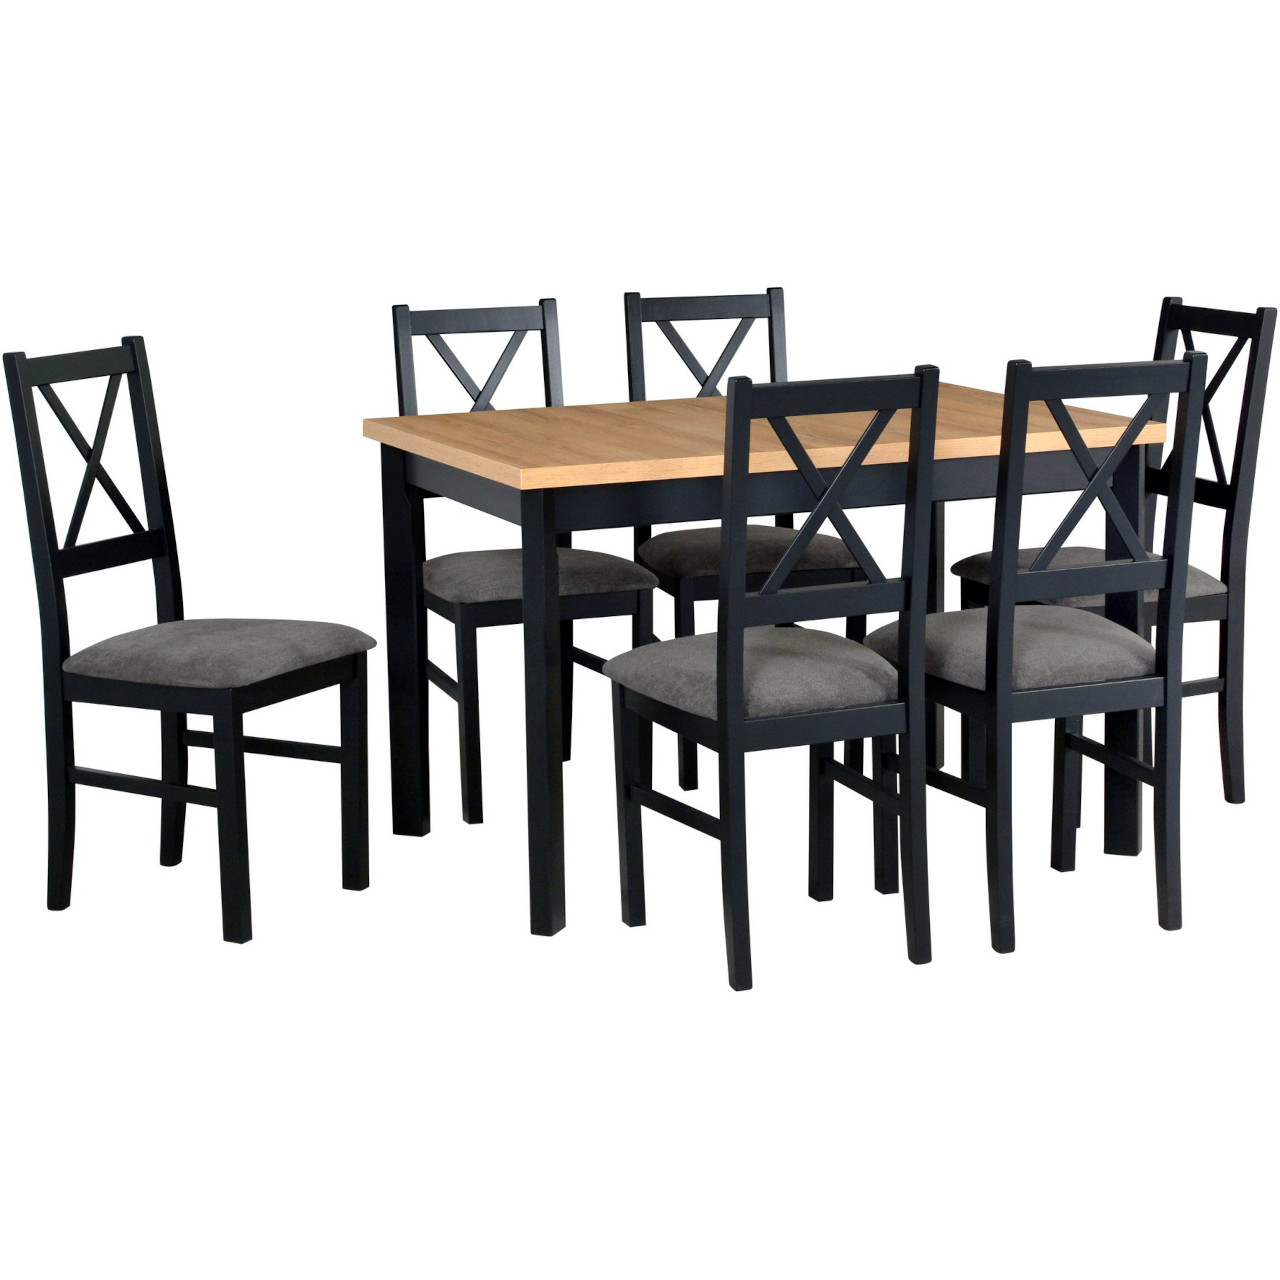 Table MAX 5 P grandson laminate / black + chairs NILO 10 (6 pcs.) black / 15B